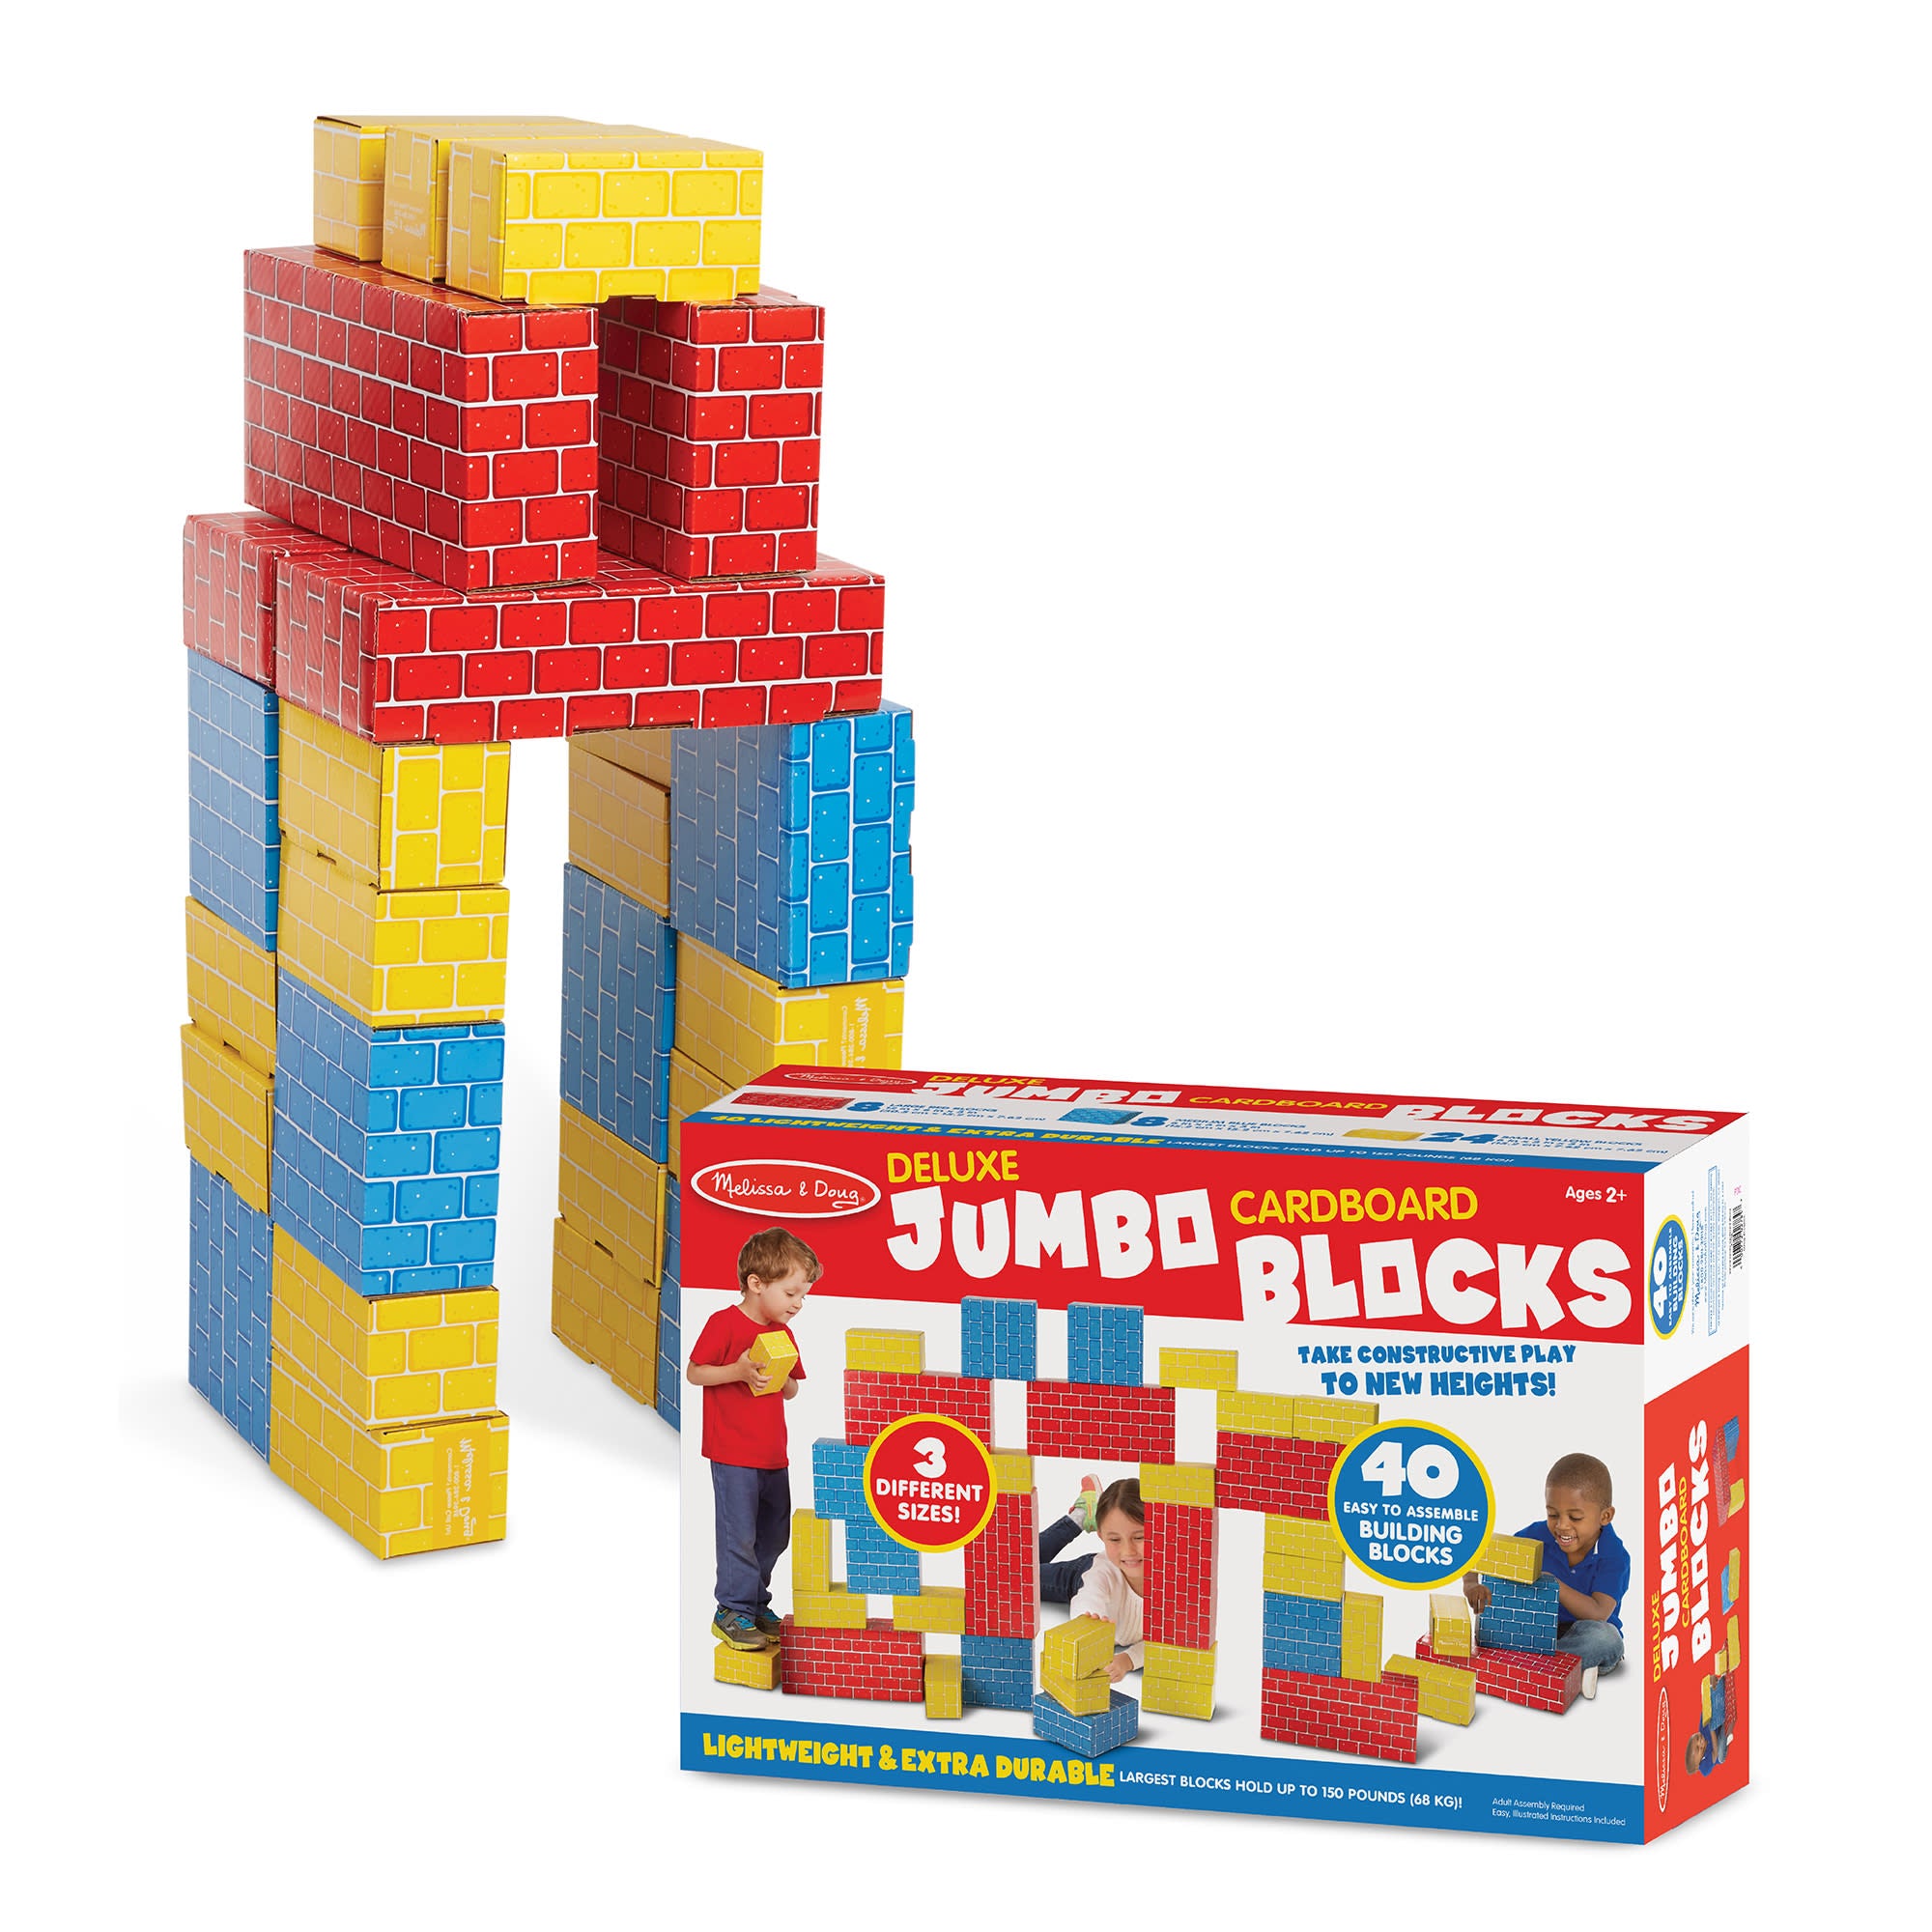 Melissa & Doug Deluxe Jumbo Cardboard Blocks (40 pc) - 2784